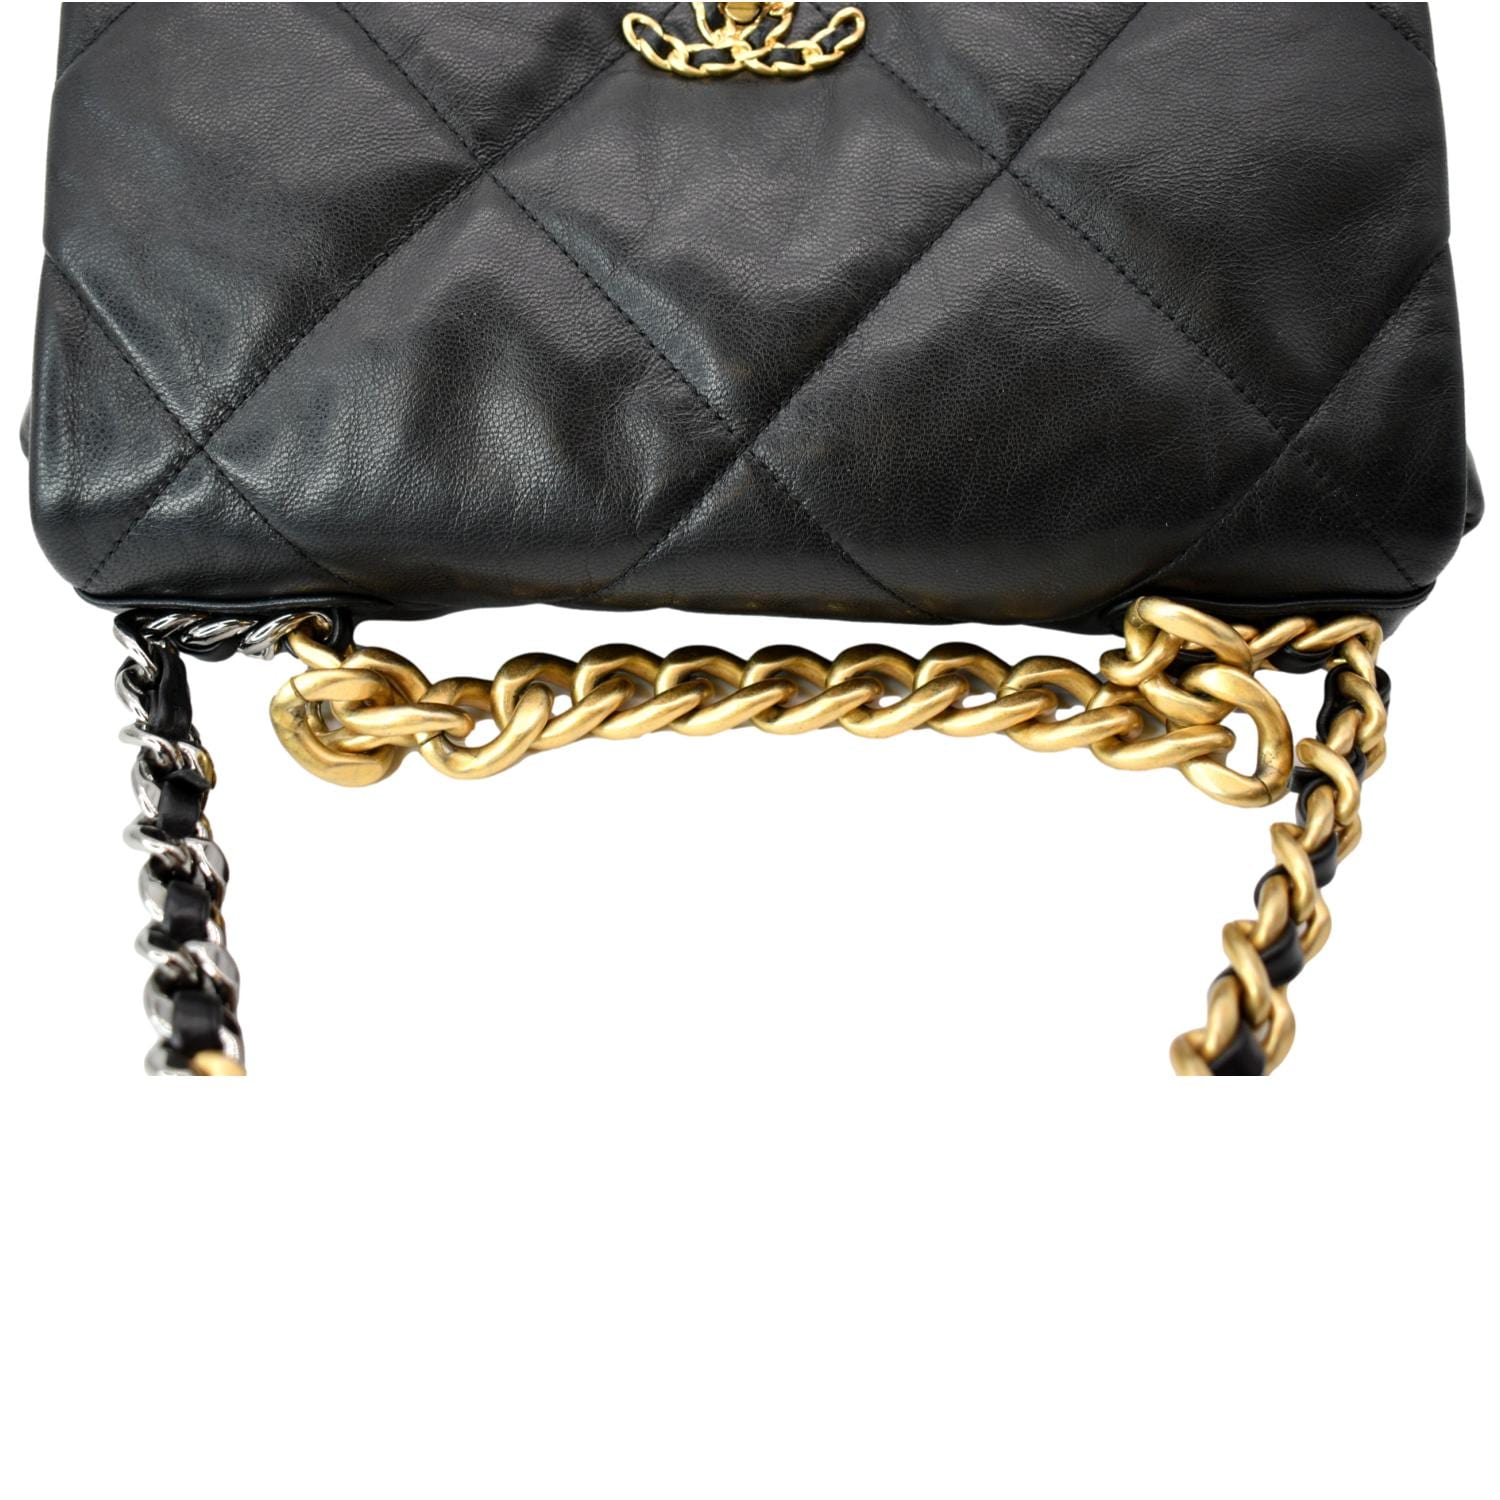 Chanel 19 Bag Gorgeous Shopping 🛍 Paris All Colors Chanel bag 19